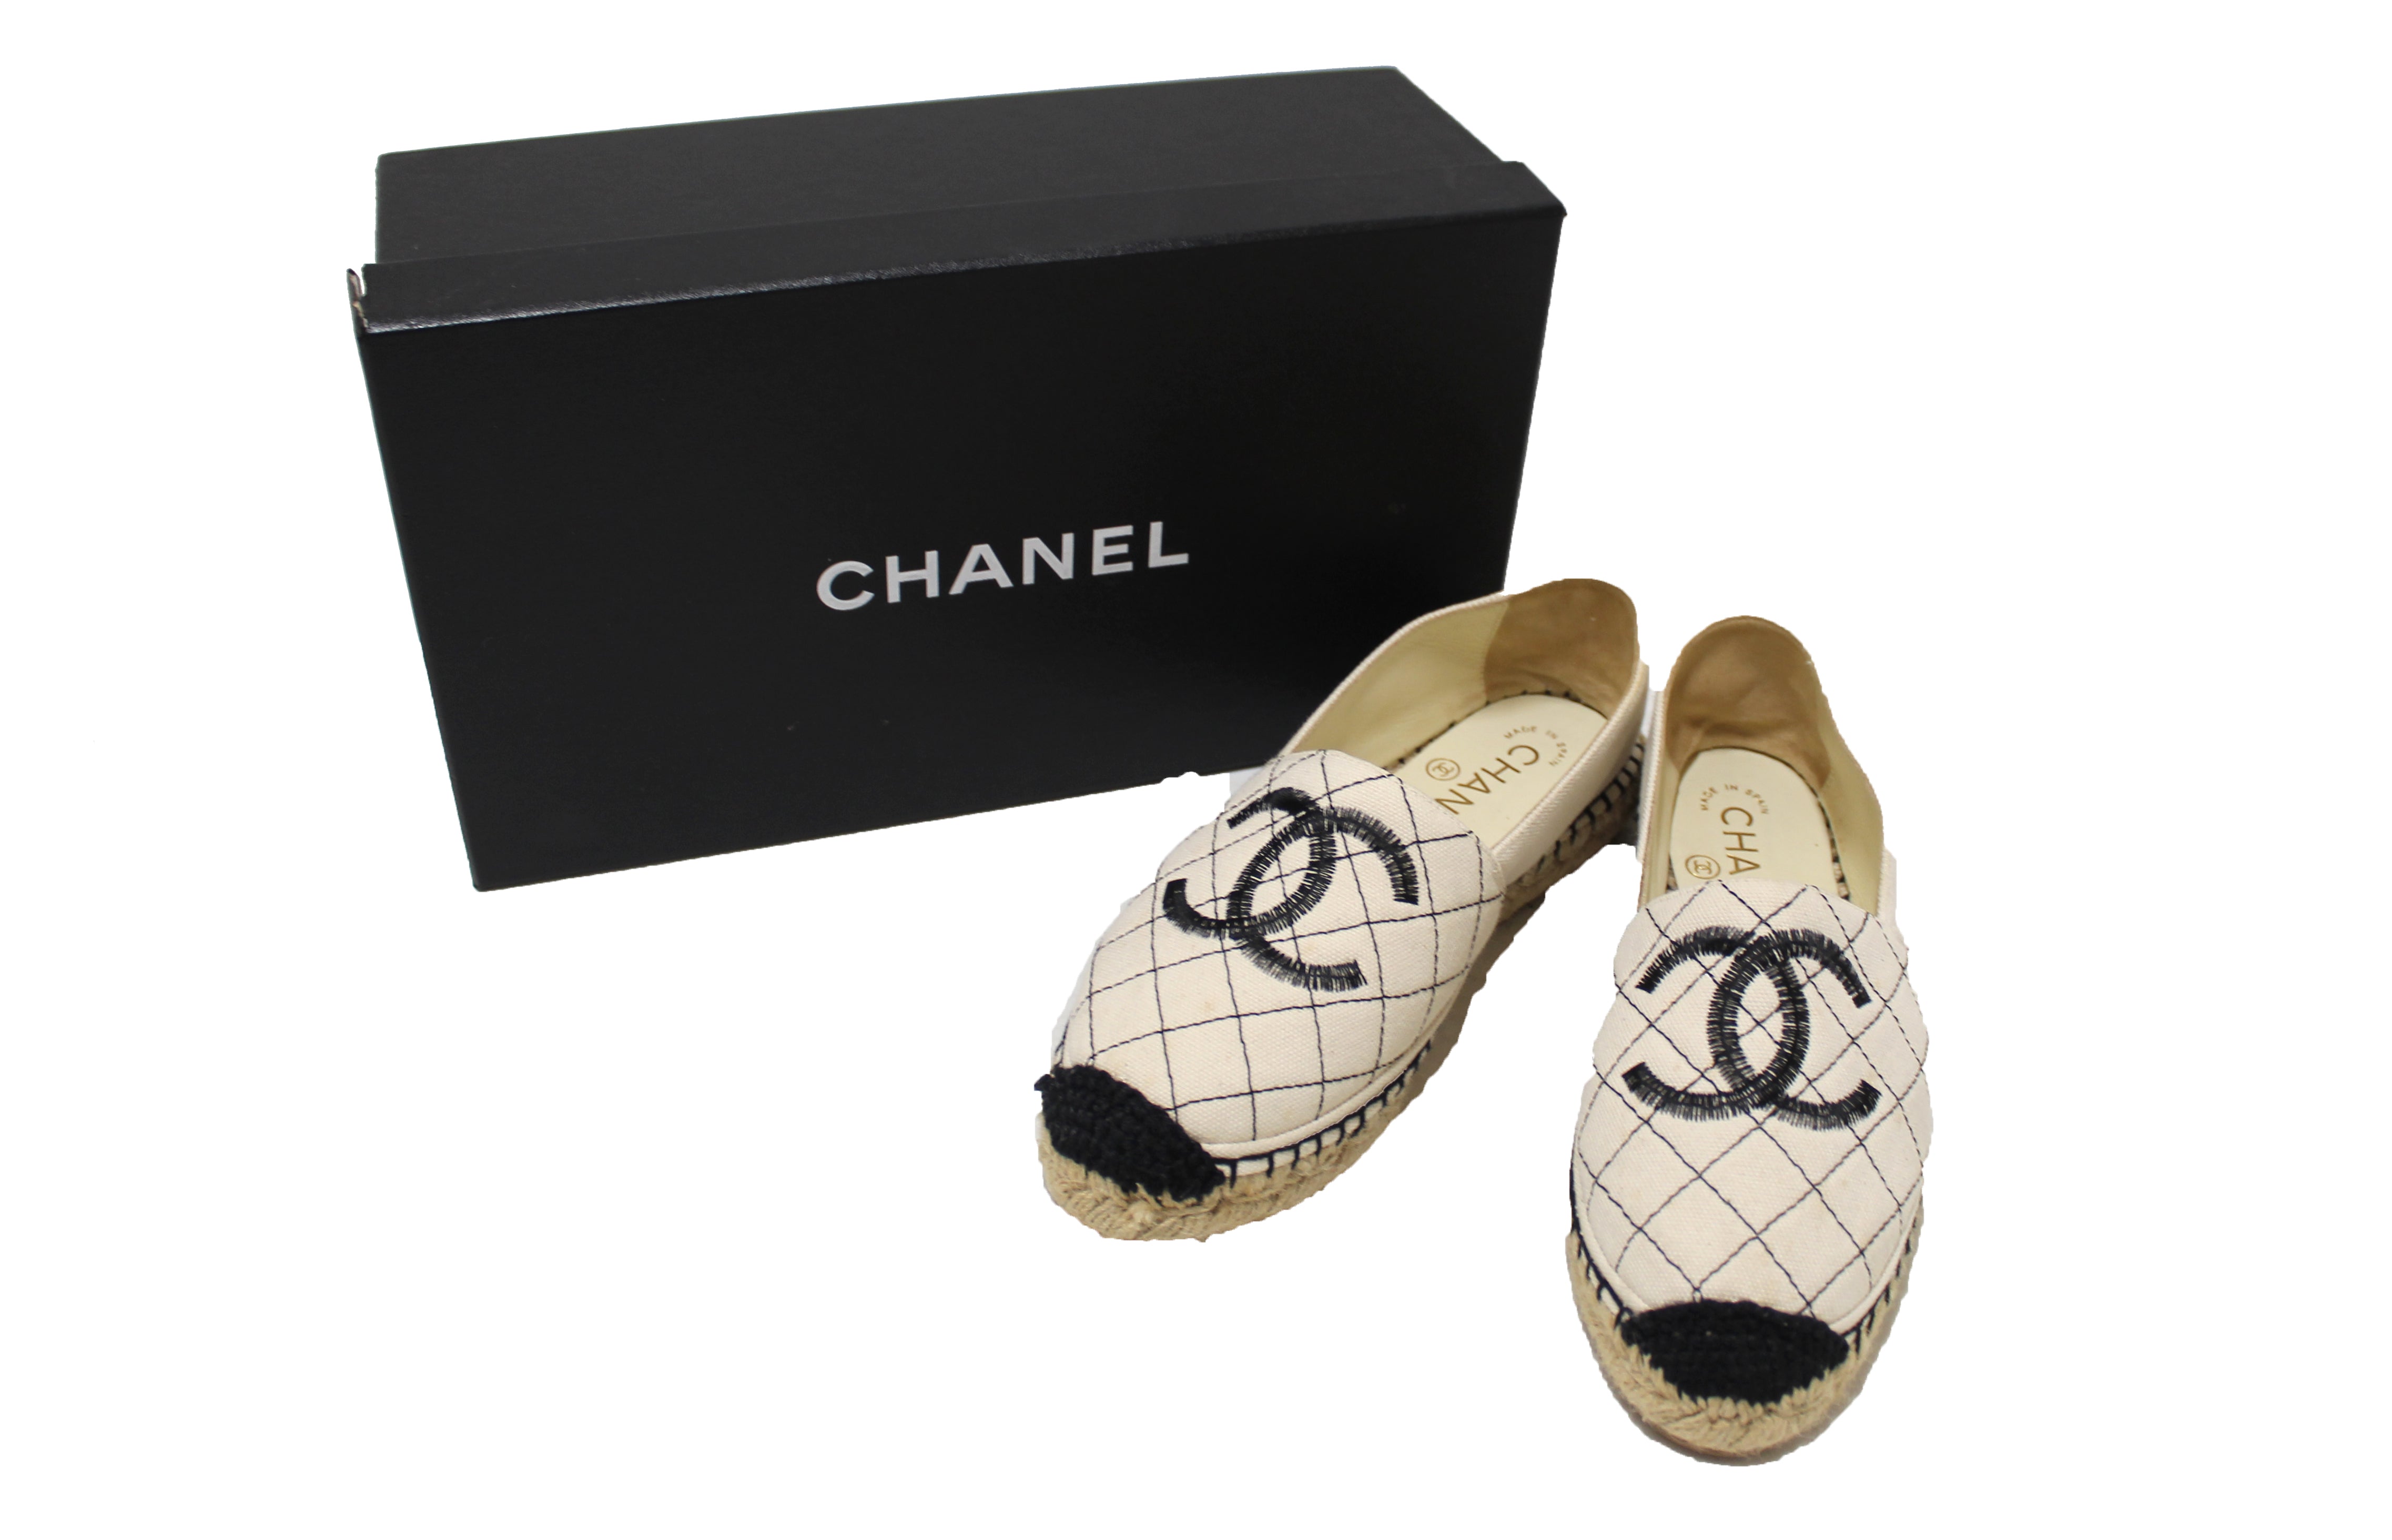 Tas Semi Premium Hermes - Chanel Espadrilles Leather Semipremium Authentic  FULLSET BOX 0,7 kg Warna : Black, Apricot Size (insole) 36 : 22.5 cm 37 :  23 cm 38 : 23.5 cm 39 : 24 cm 40 : 24.5 cm